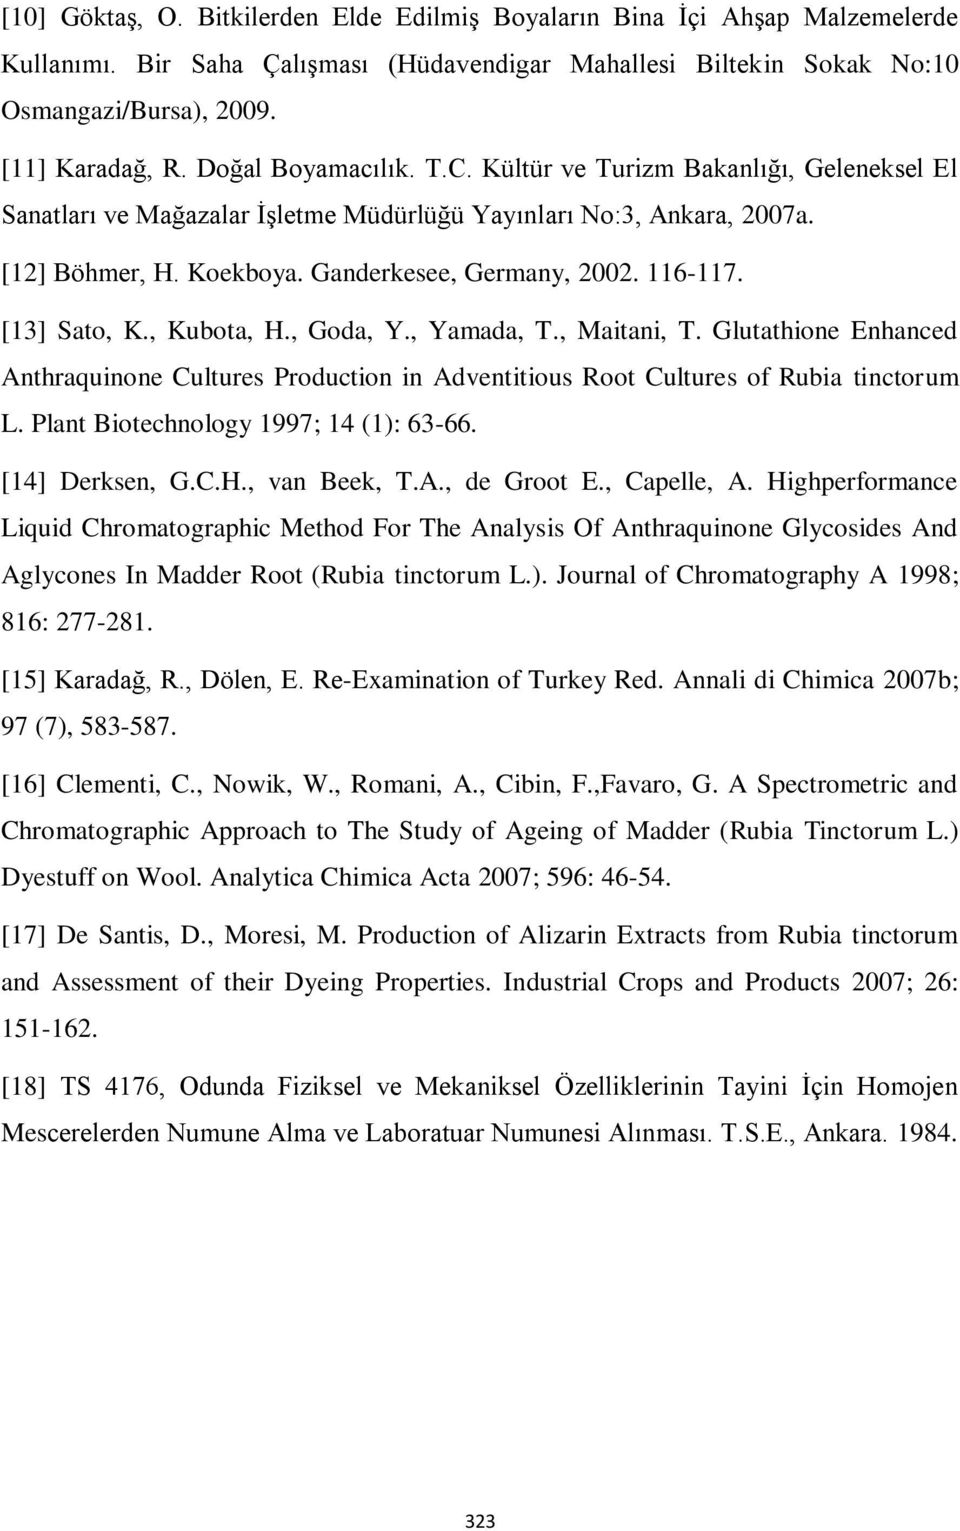 [13] Sato, K., Kubota, H., Goda, Y., Yamada, T., Maitani, T. Glutathione Enhanced Anthraquinone Cultures Production in Adventitious Root Cultures of Rubia tinctorum L.